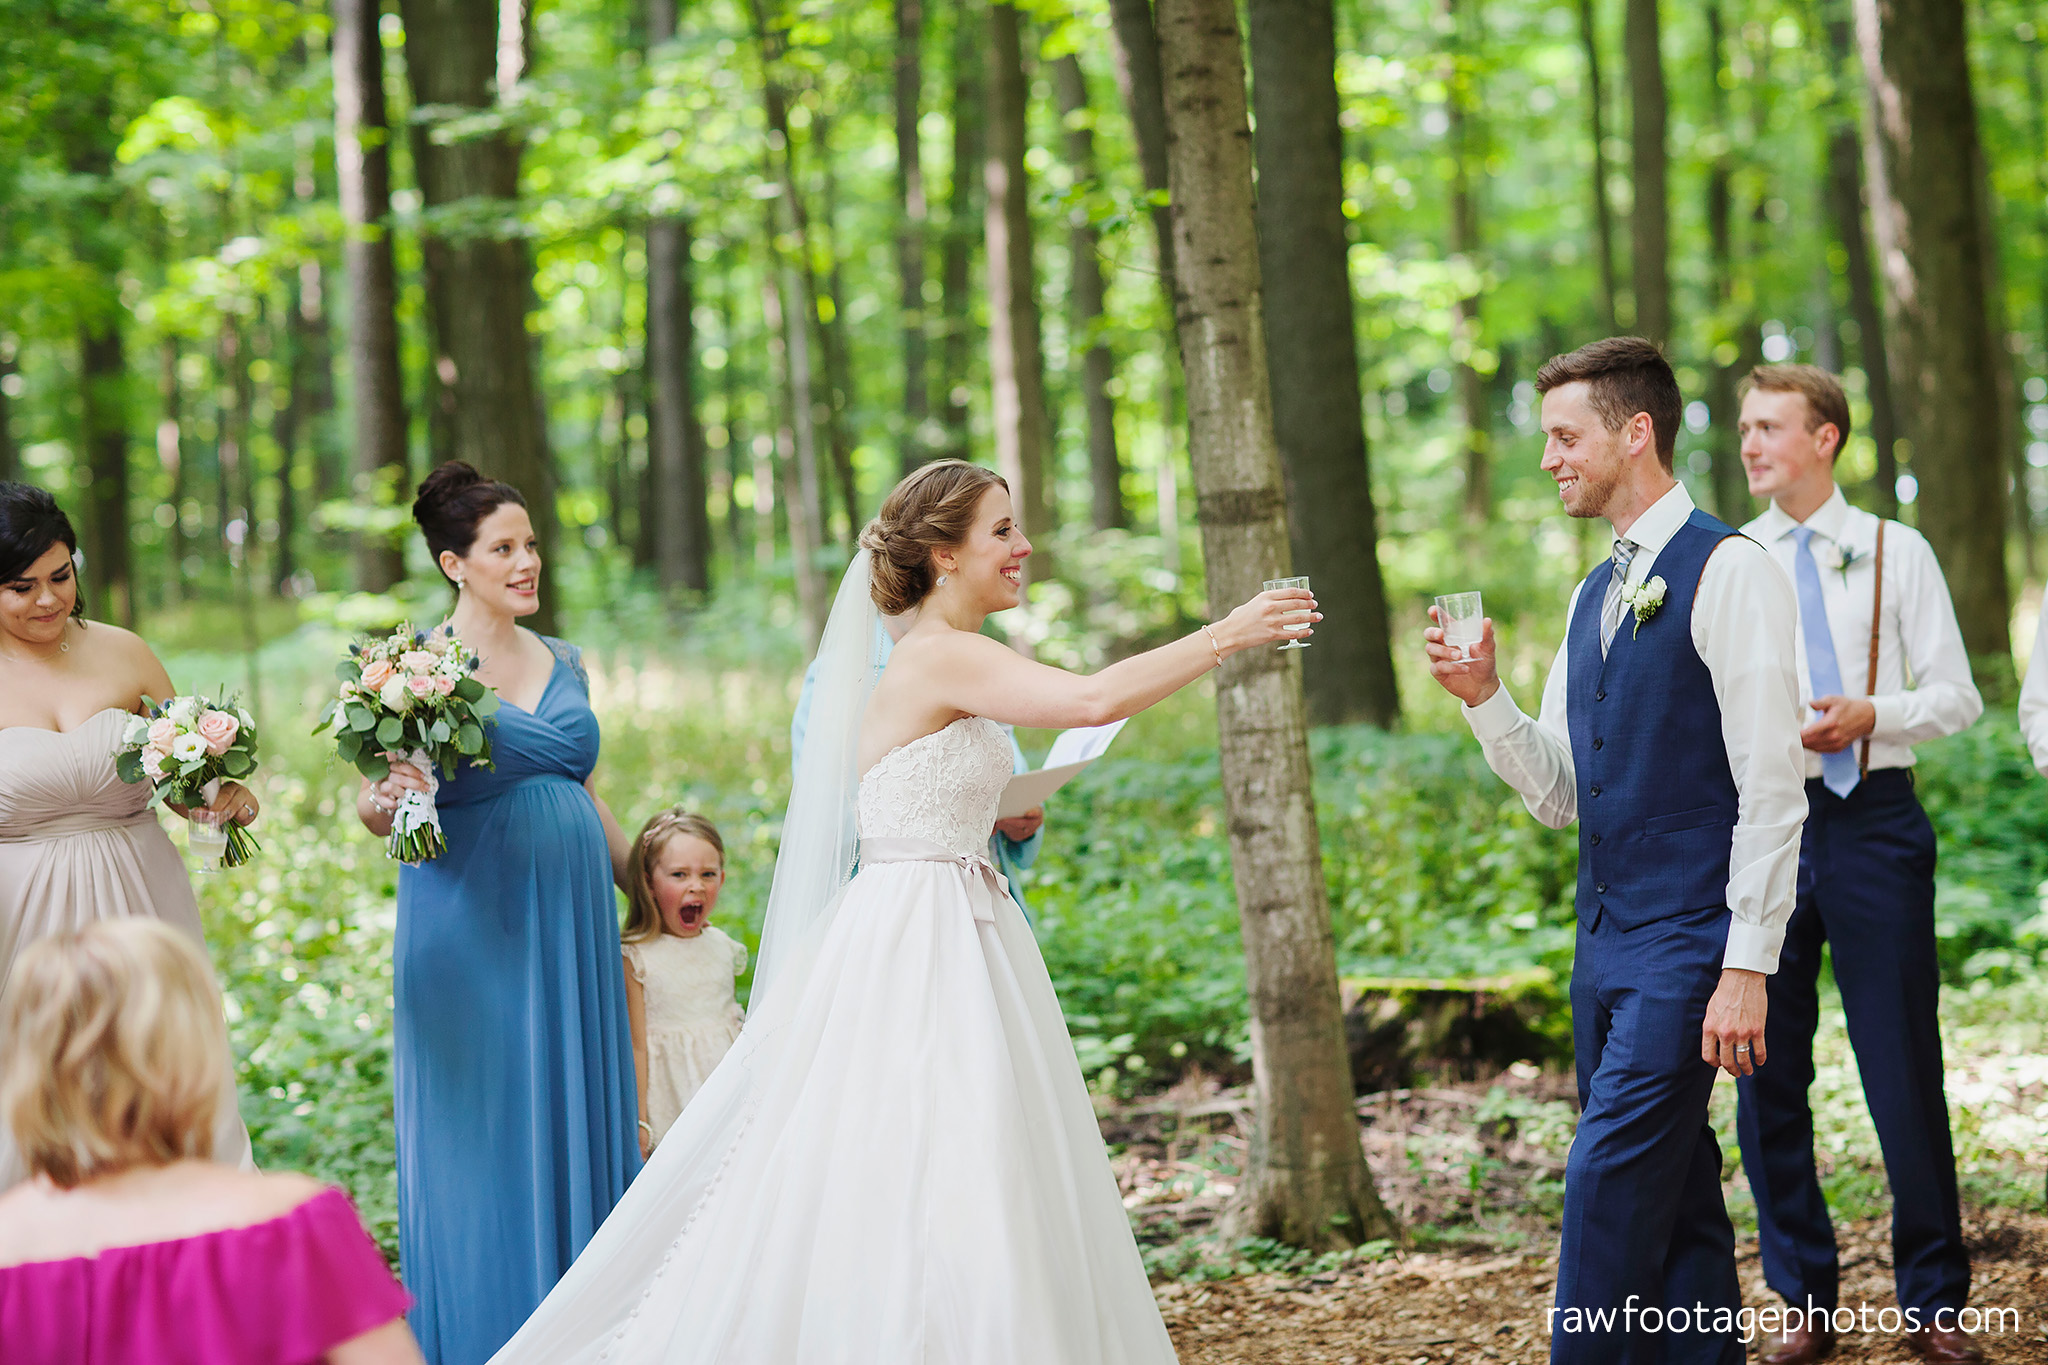 London_Ontario_Wedding_Photographer-Raw_Footage_photography-Forest_wedding-Woodsy_wedding-DIY_Wedding-Candid_Wedding_Photography050.jpg